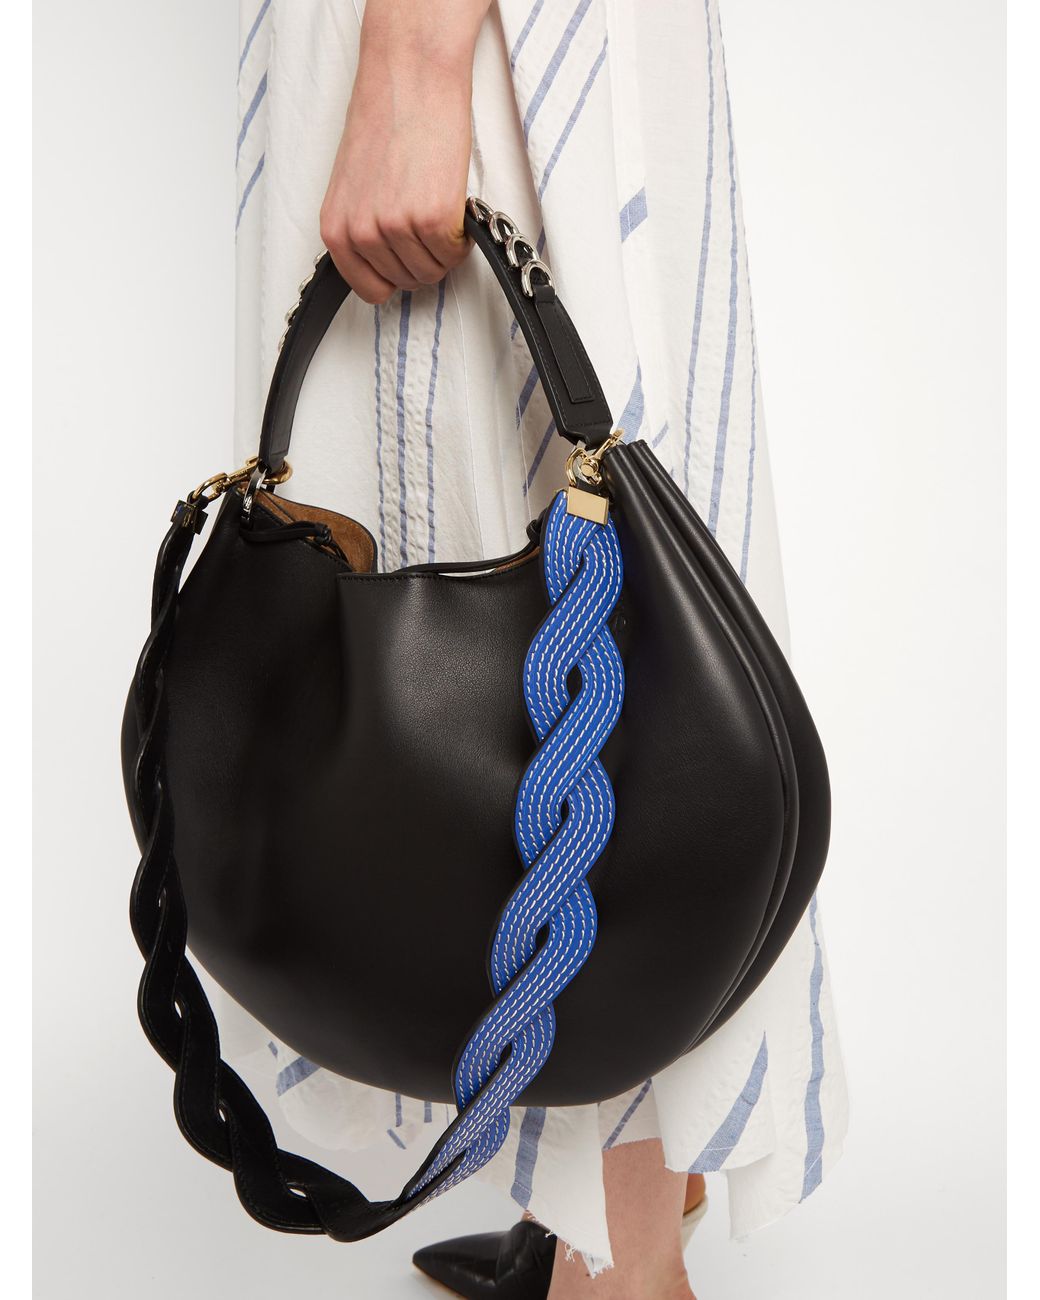 Loewe Braided Leather Bag Strap in Blue